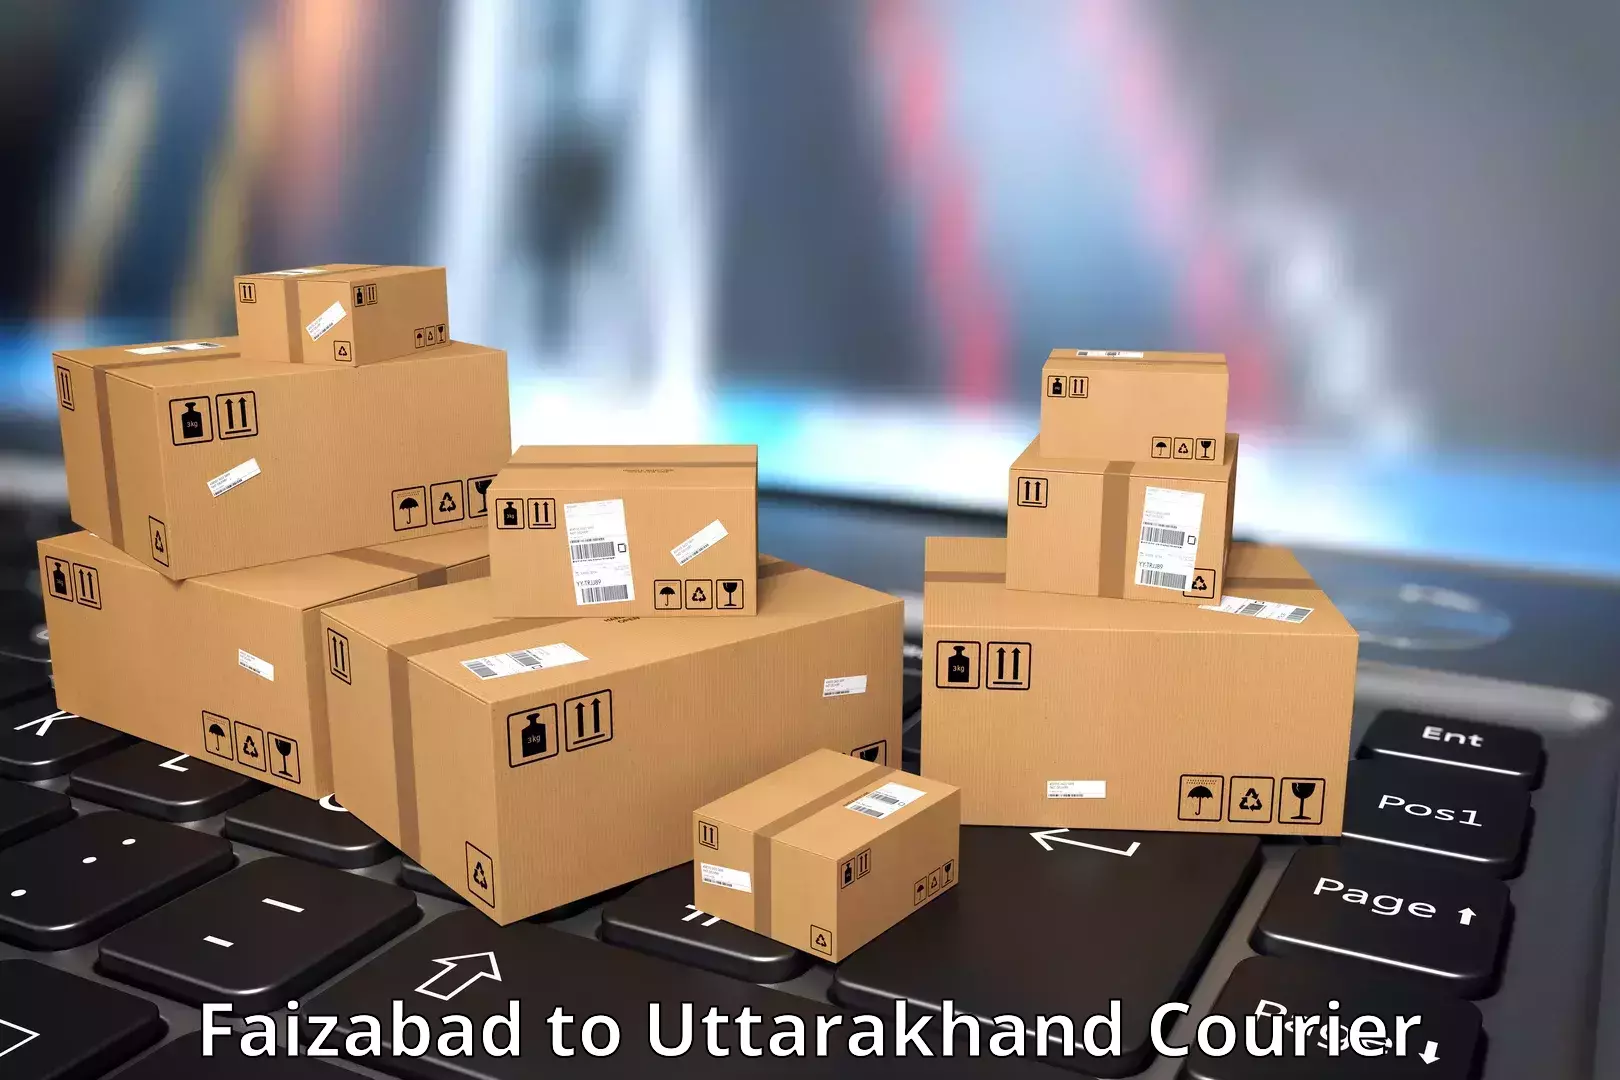 Courier service innovation Faizabad to Rishikesh